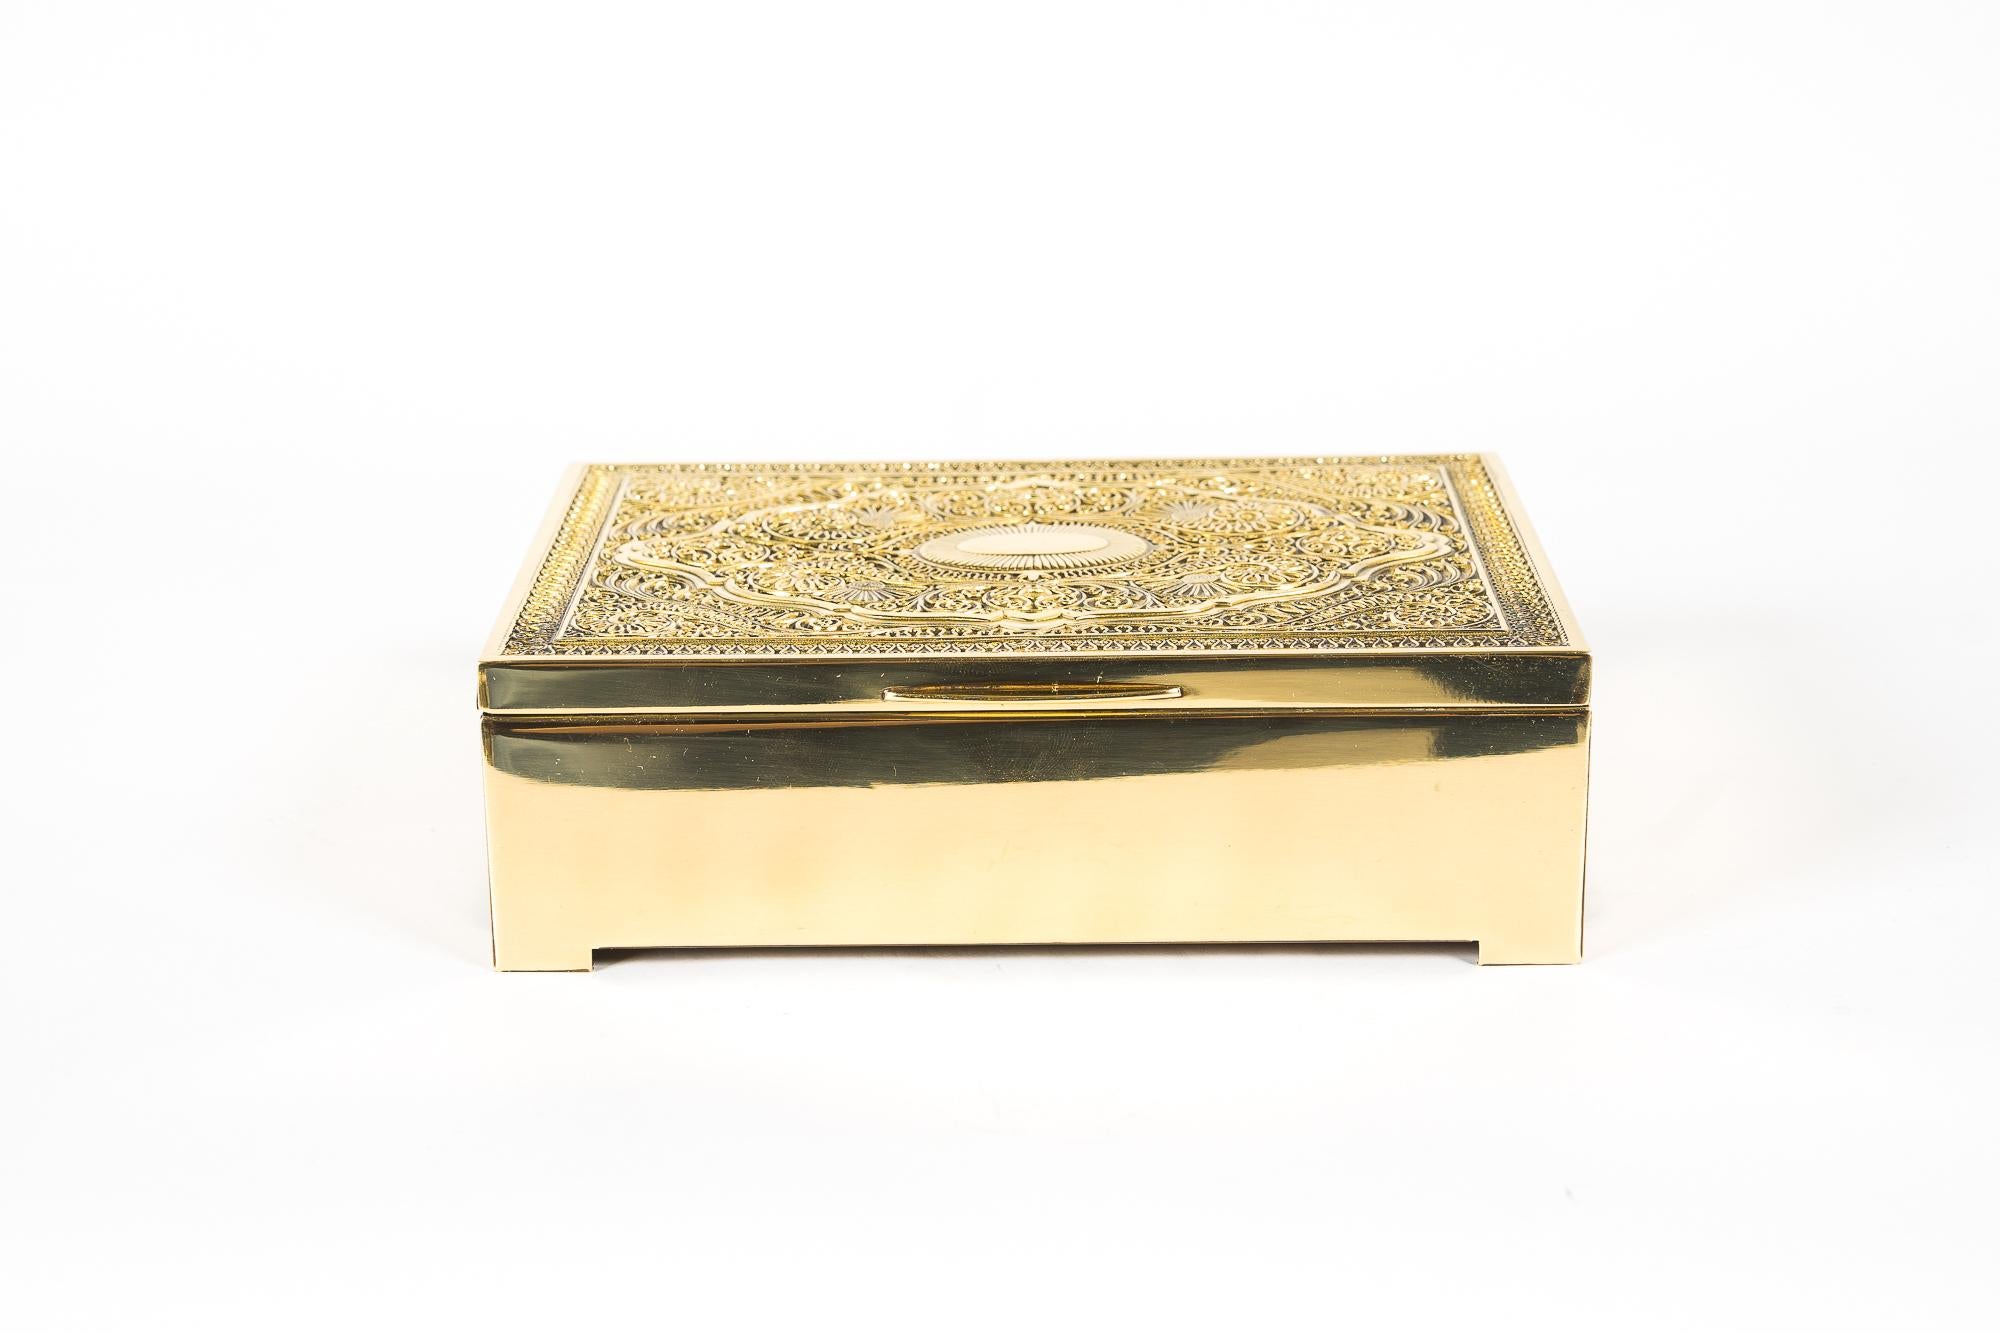 Art Deco jewelry box, Vienna, around 1920s
Brass polished and stove enameled.